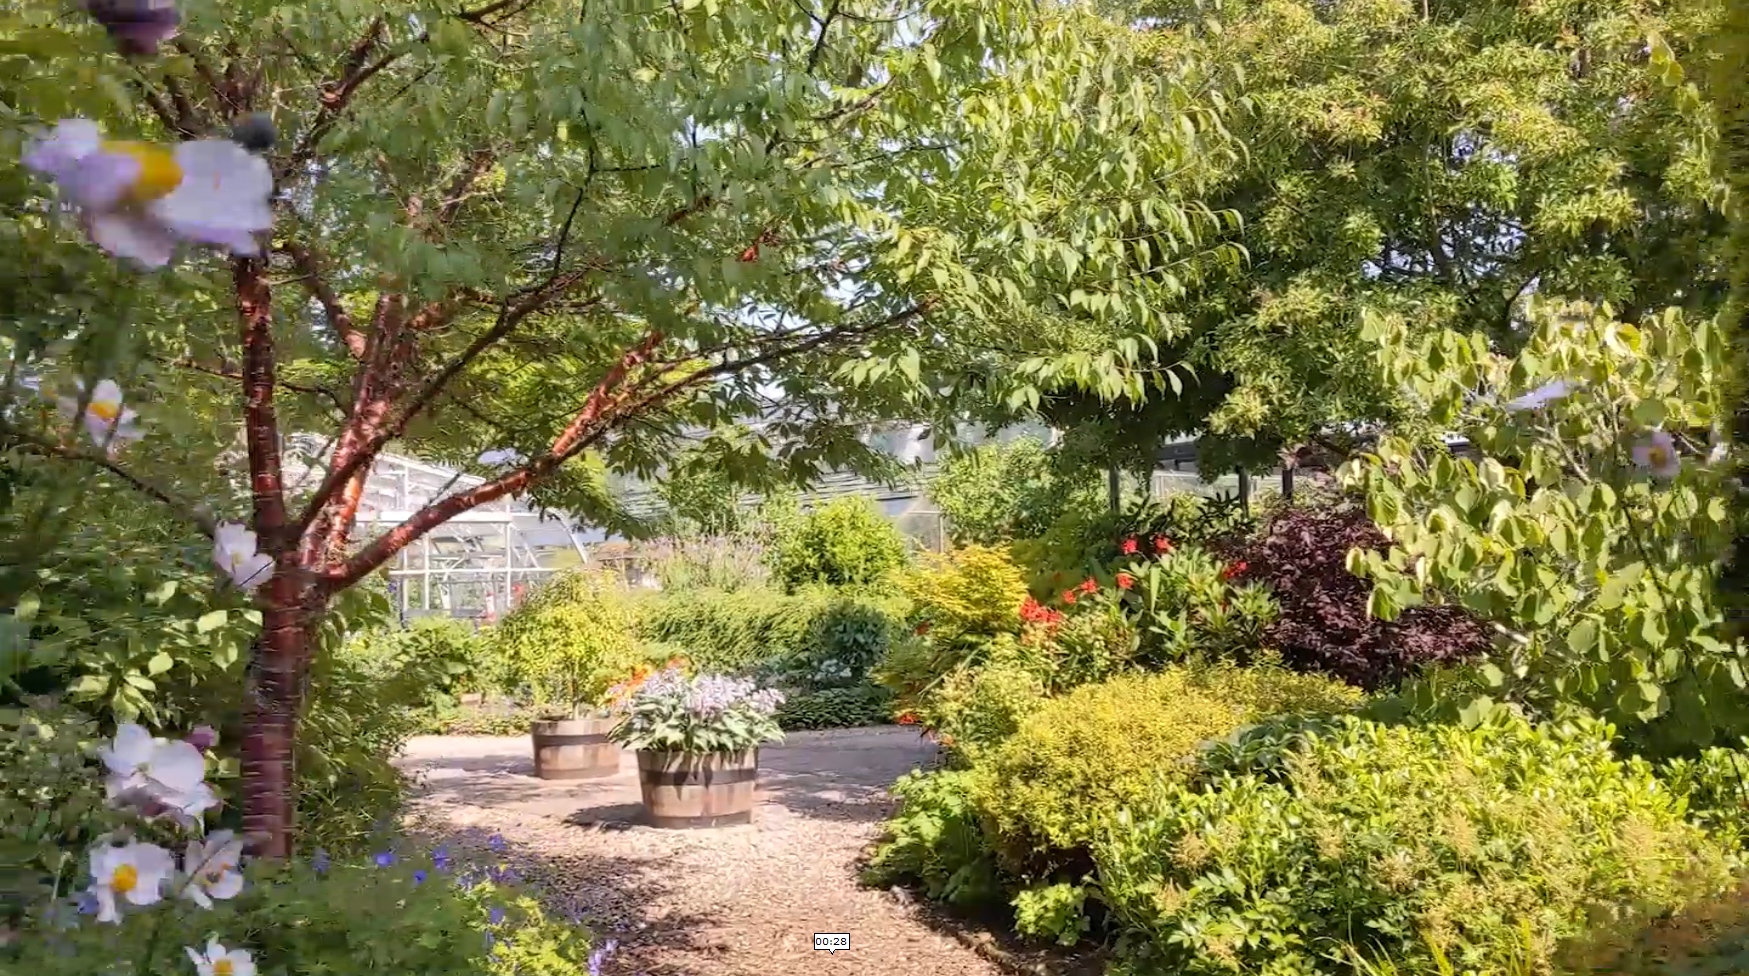 Inverness Botanic Gardens